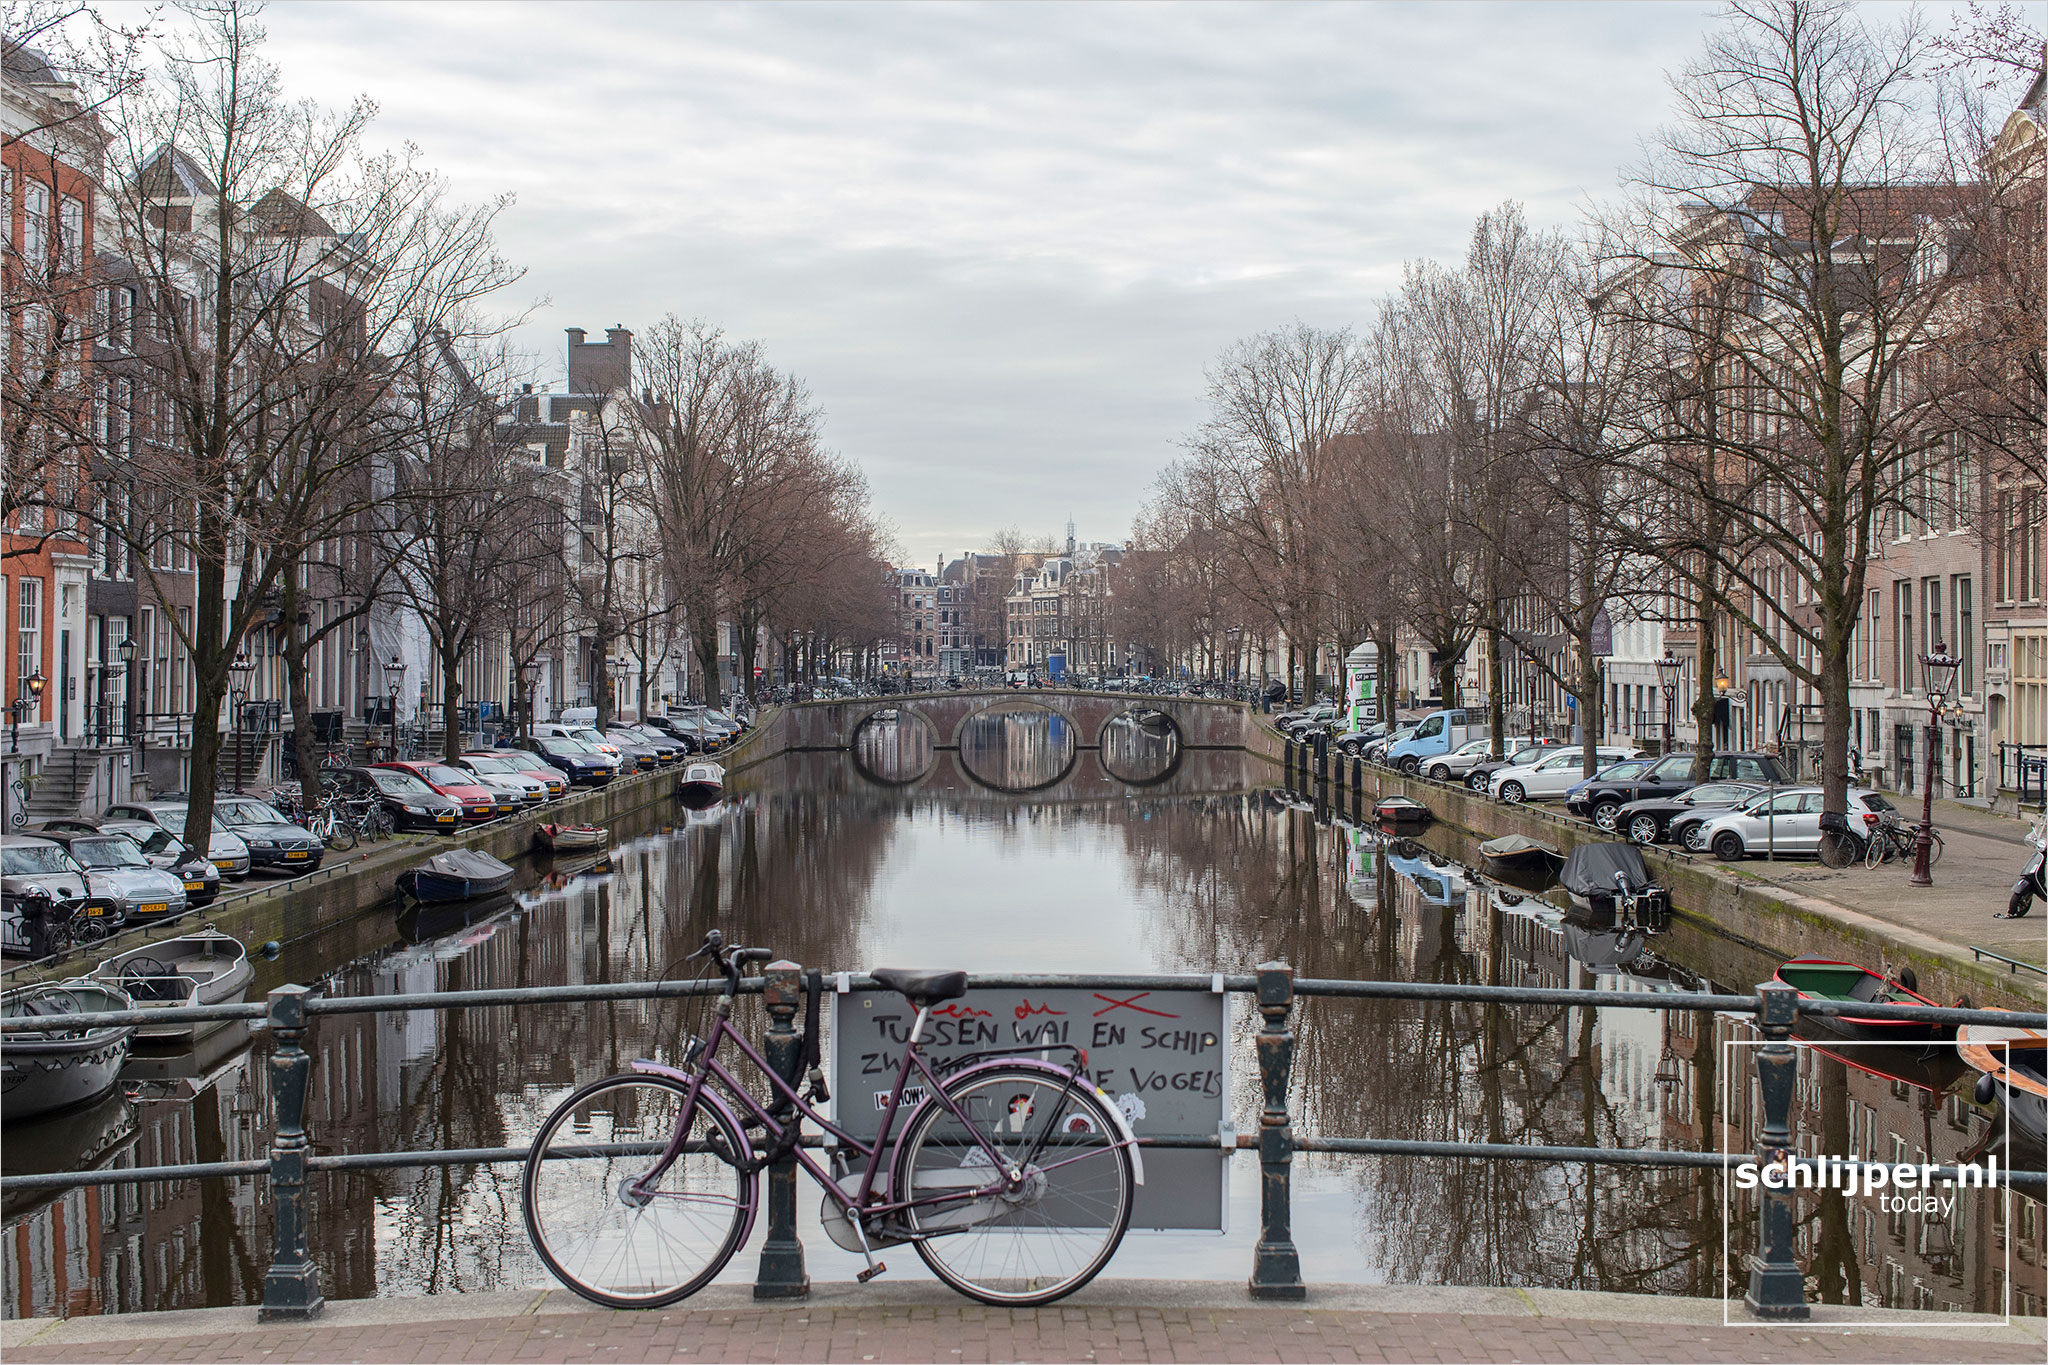 The Netherlands, Amsterdam, 20 maart 2021